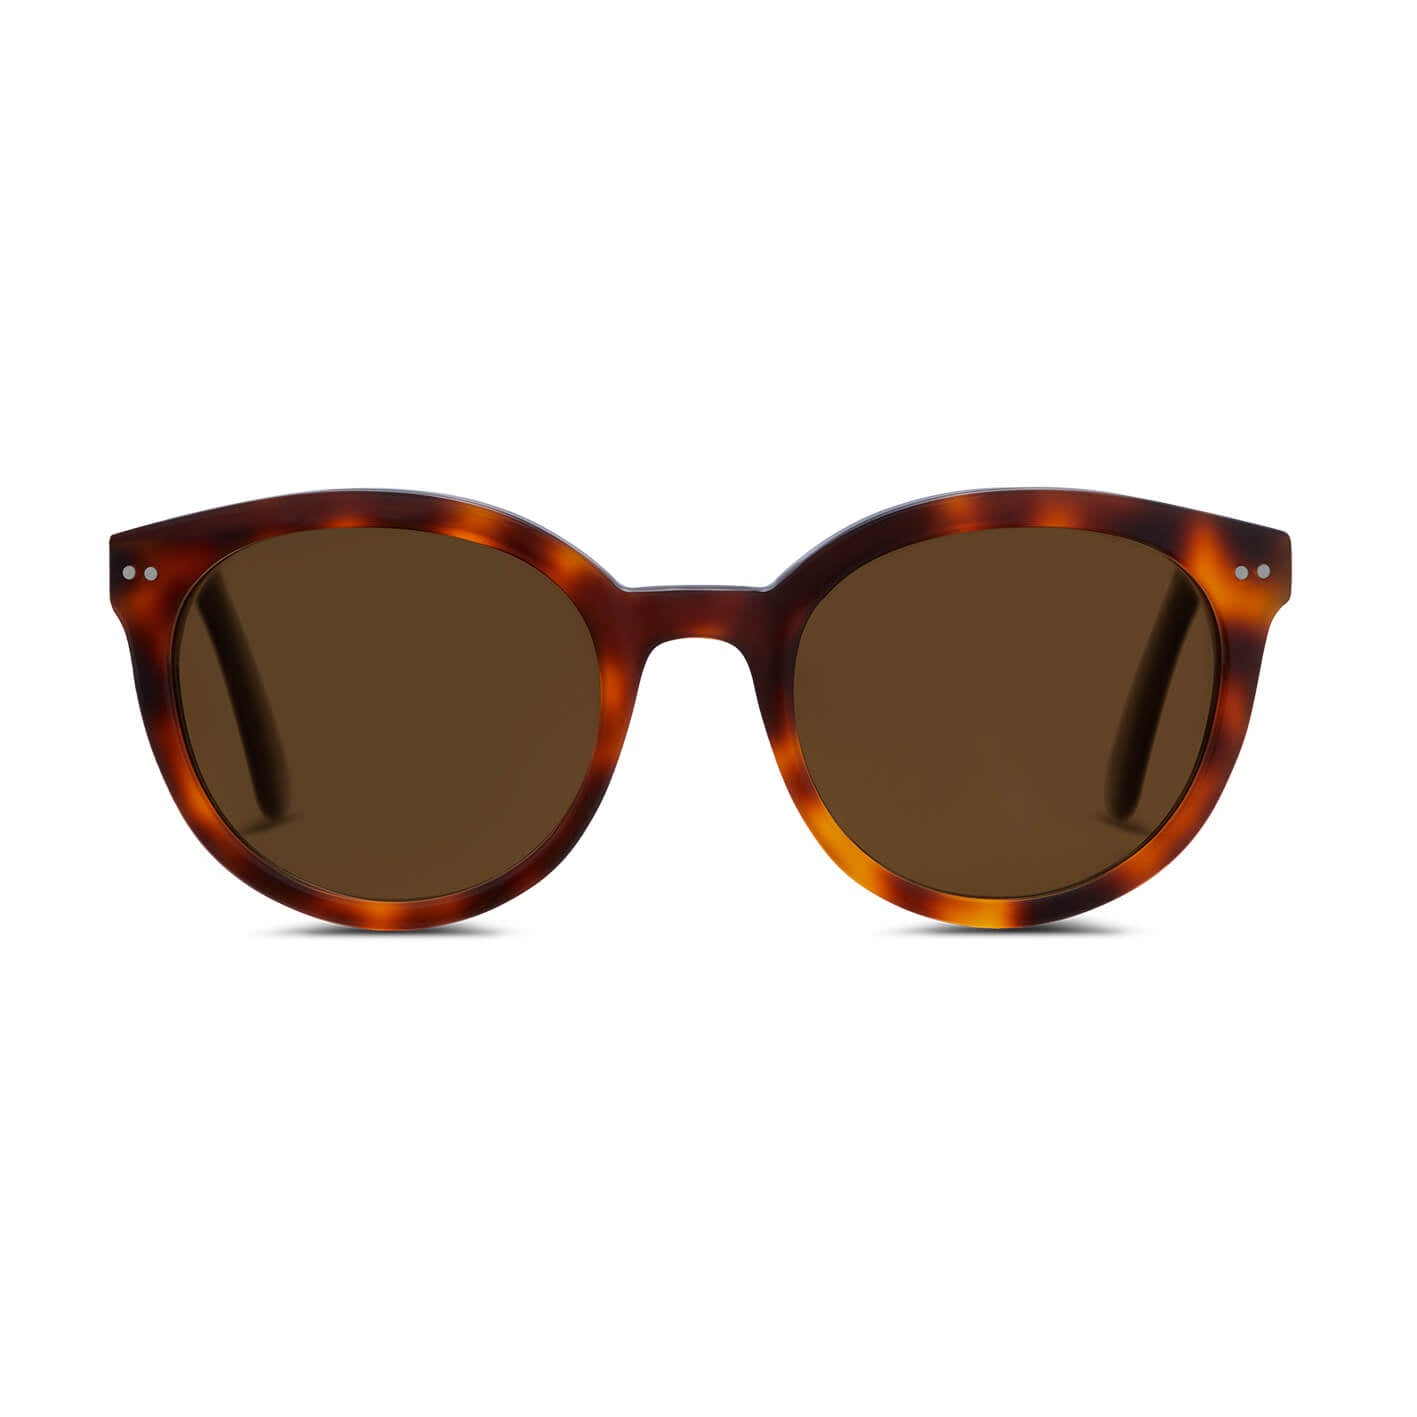 Sunglasses - Brown